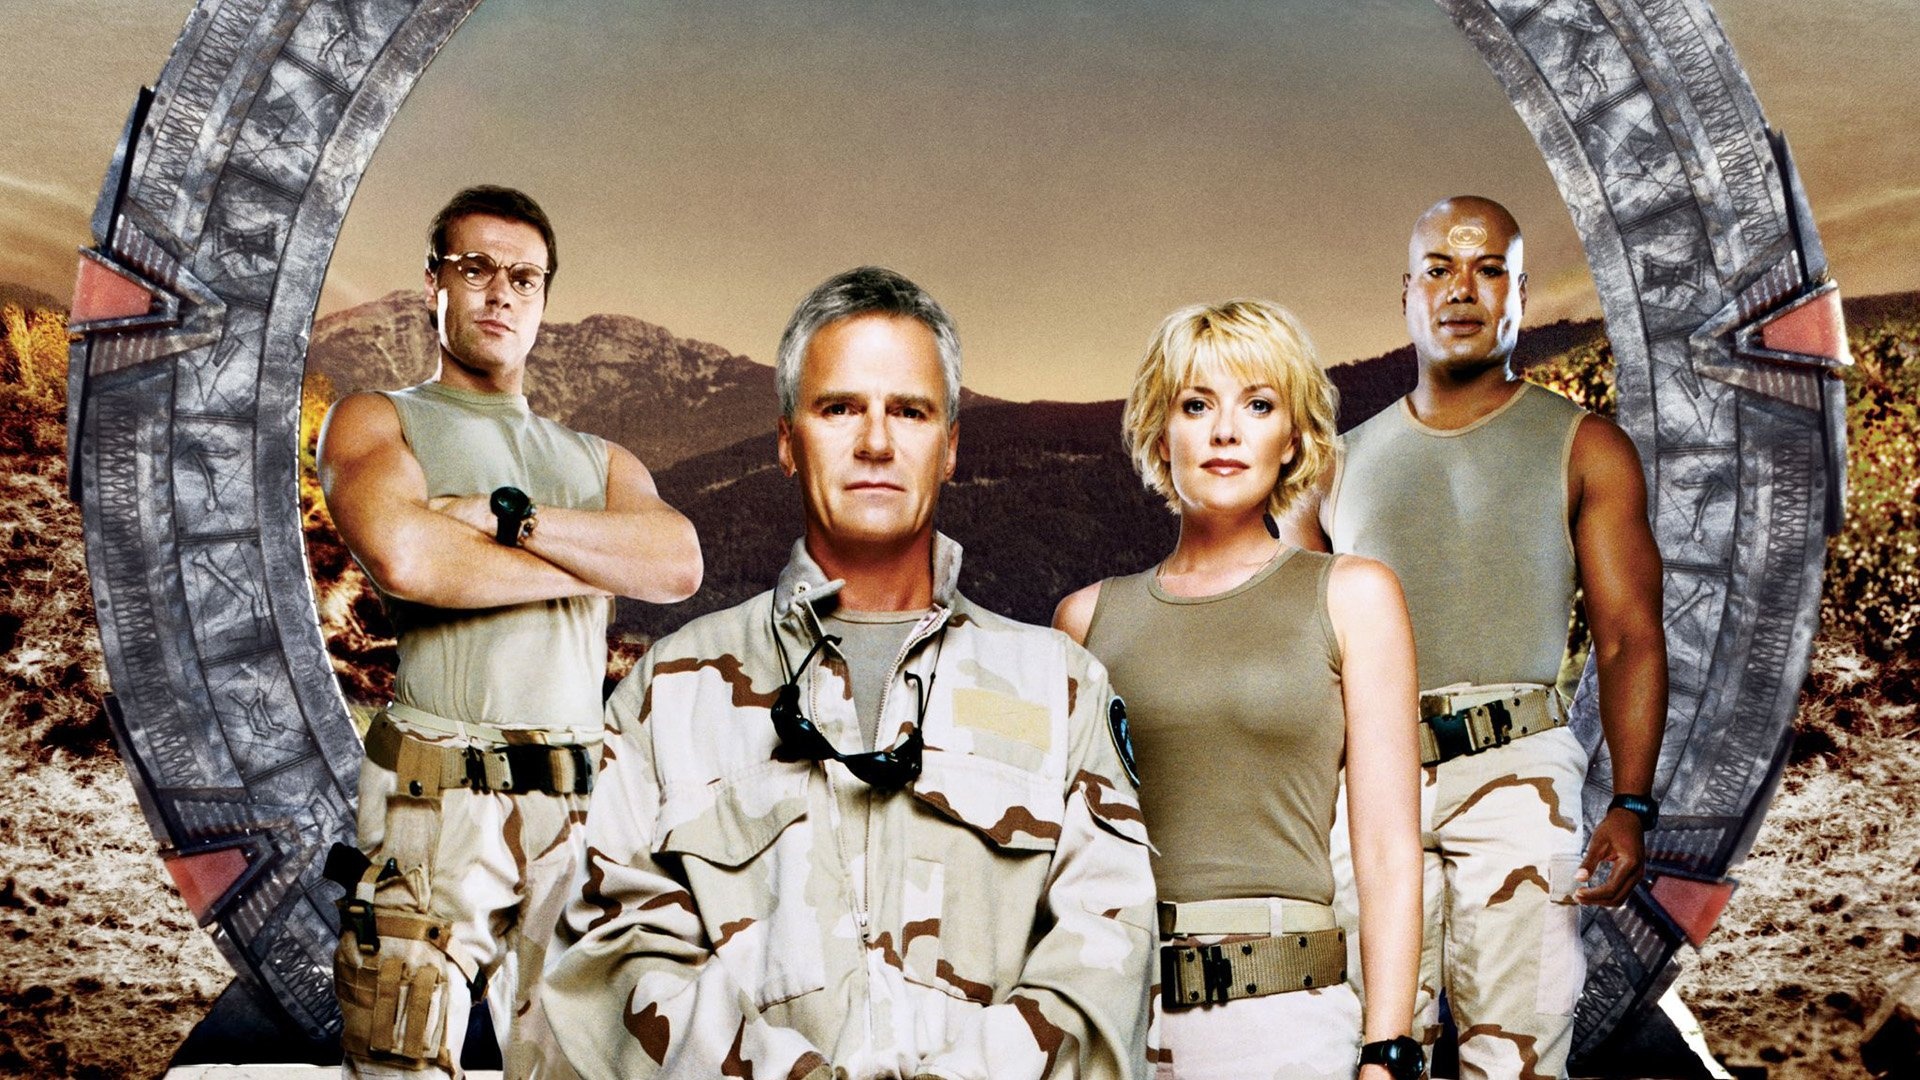 Stargate sg 1. Отряд Звездные врата 1 отряд. Звездные врата зв1 роботы.